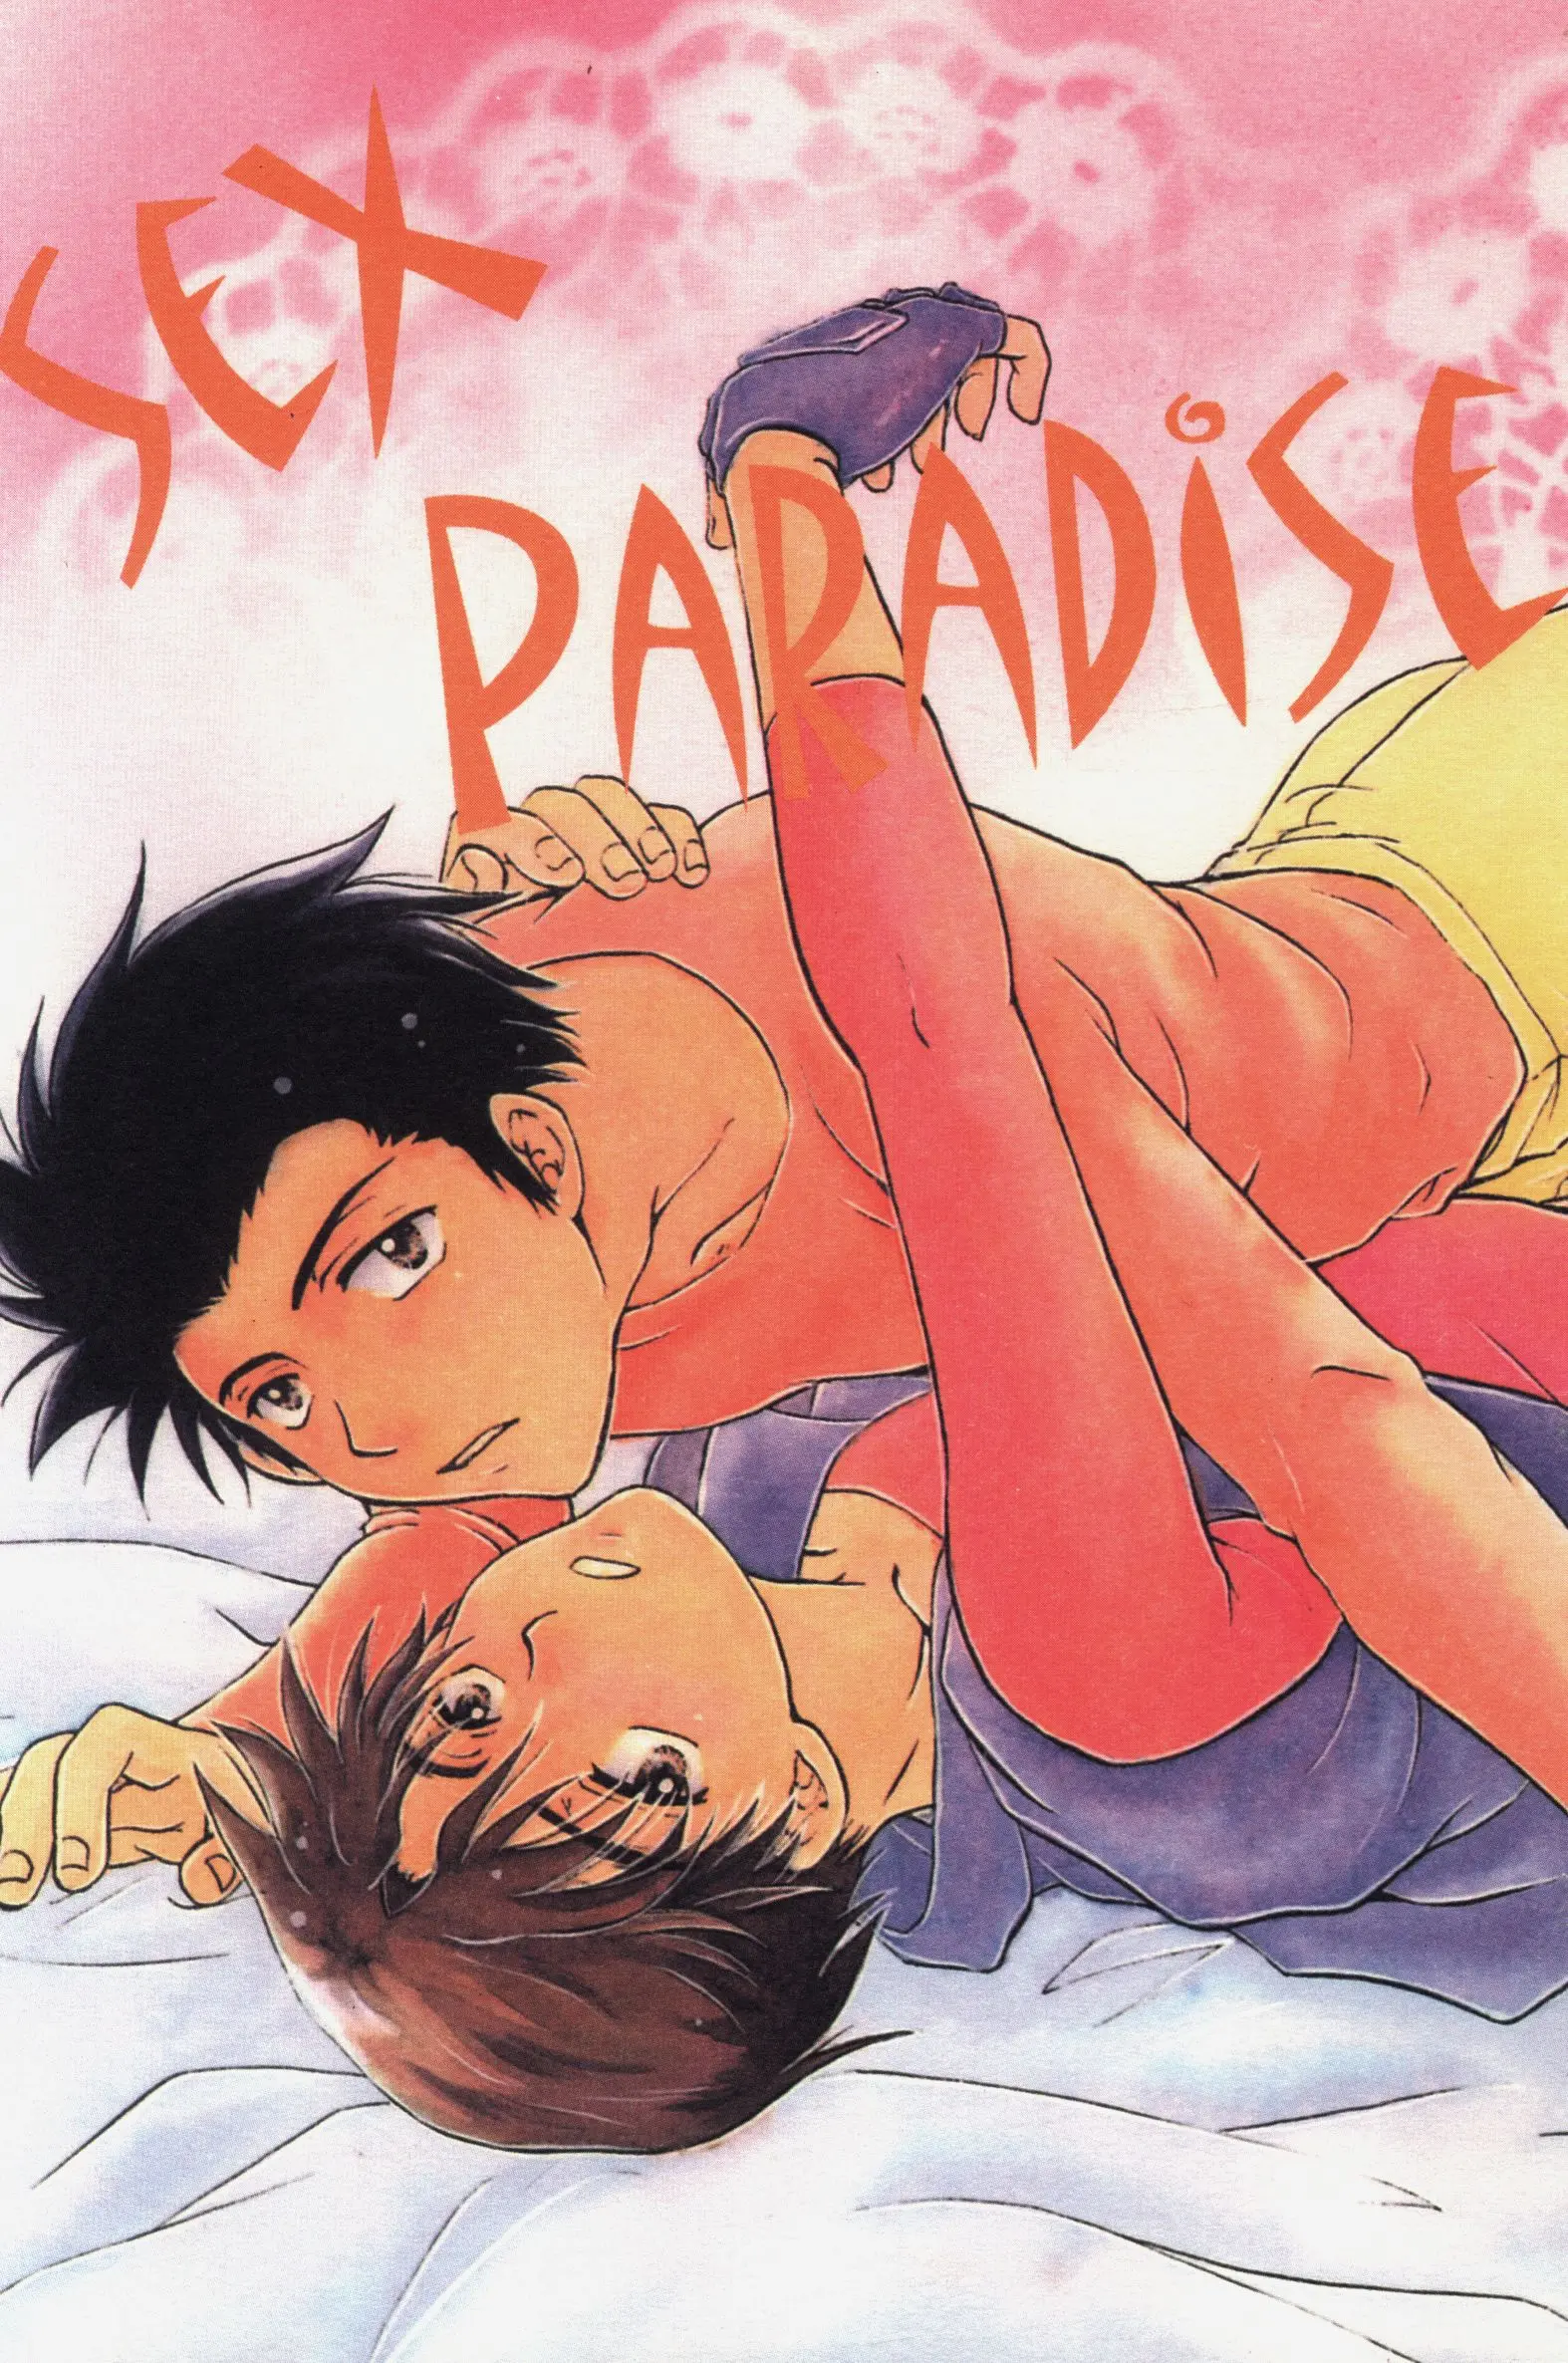 [Boys Love (Yaoi) : R18] Doujinshi - sCRYed / Kimishima x Kazuma (SEX PARADISE) / Biba Mikinosuke